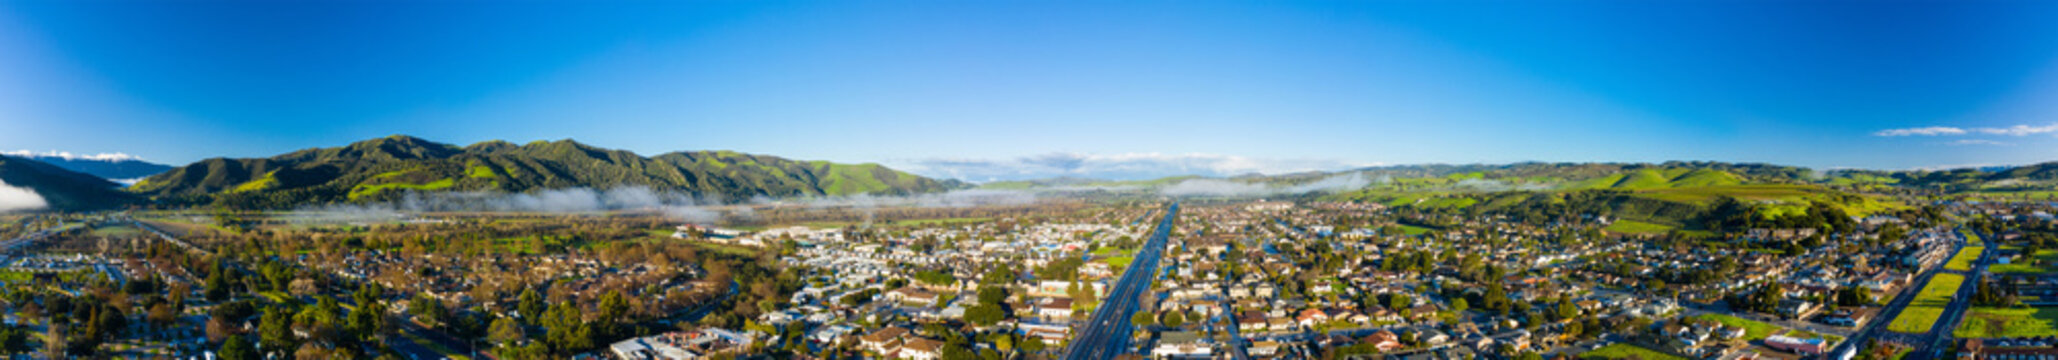 Aerial panorama Buellton California USA image